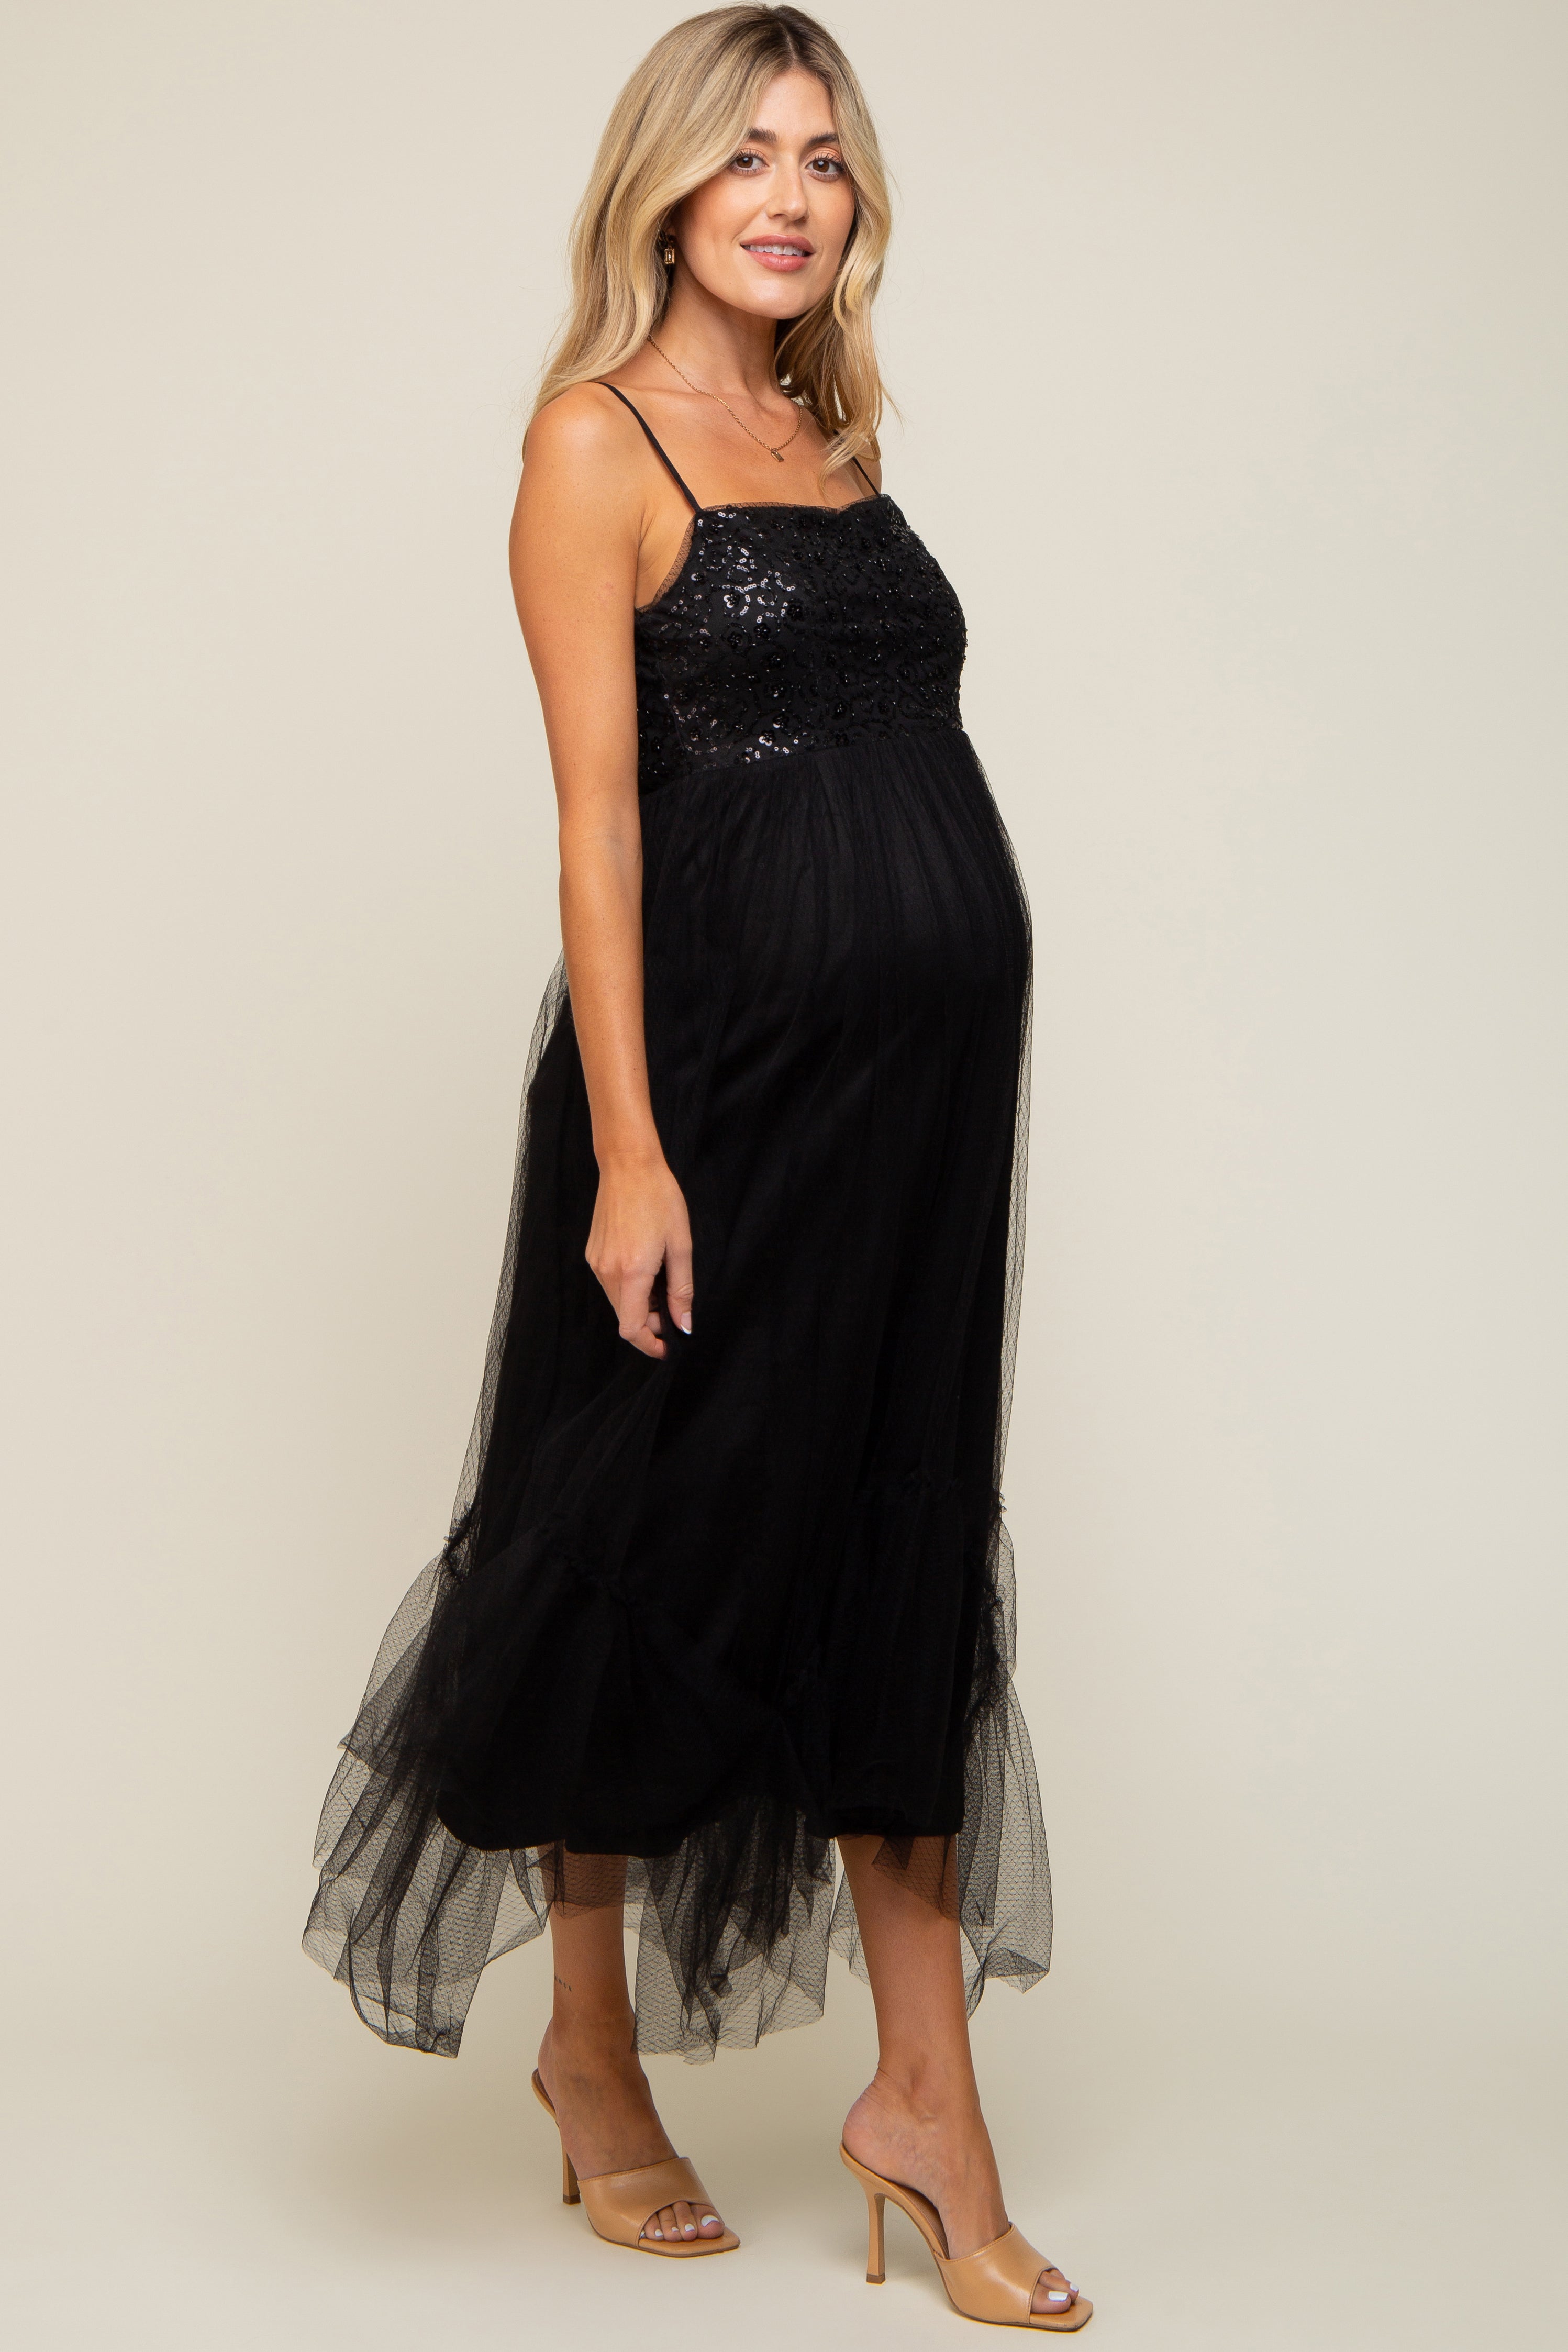 SMALL Maternity Dress NEW a glow Knot Black Full Length Maxi Kohls